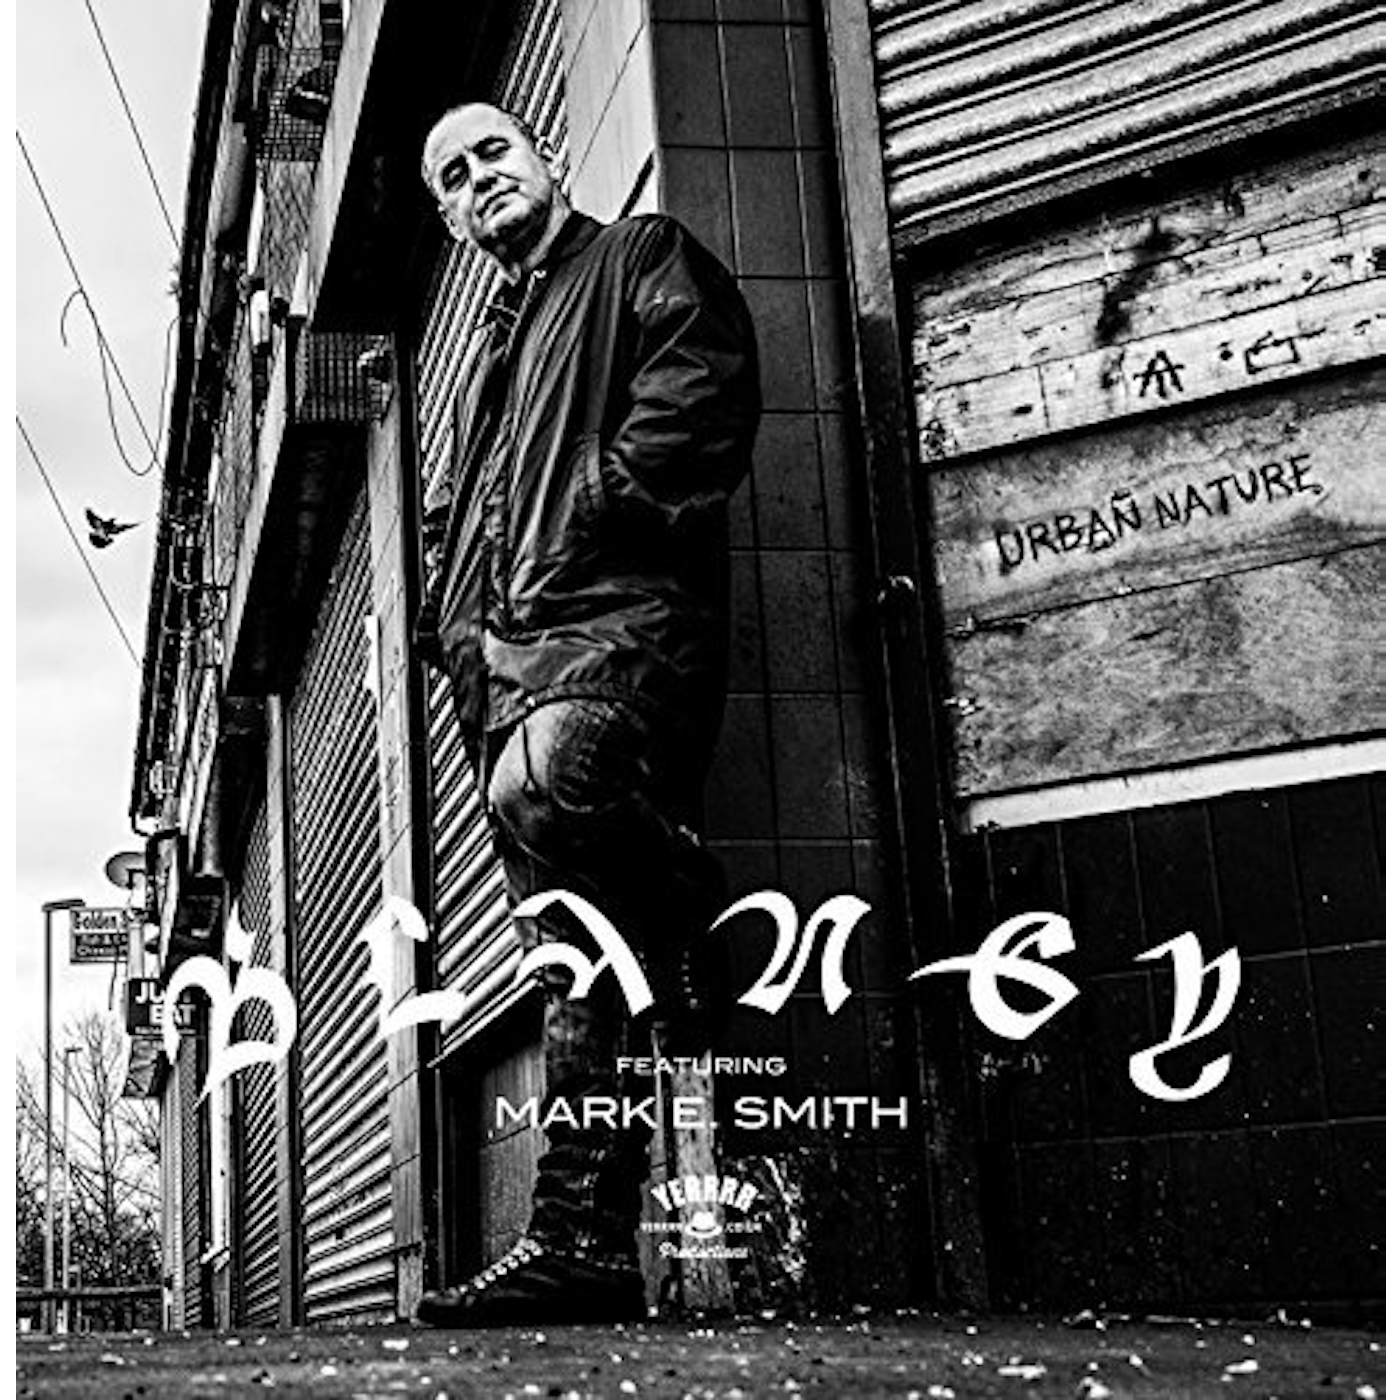 Blaney / Mark E Smith Urban Nature Vinyl Record